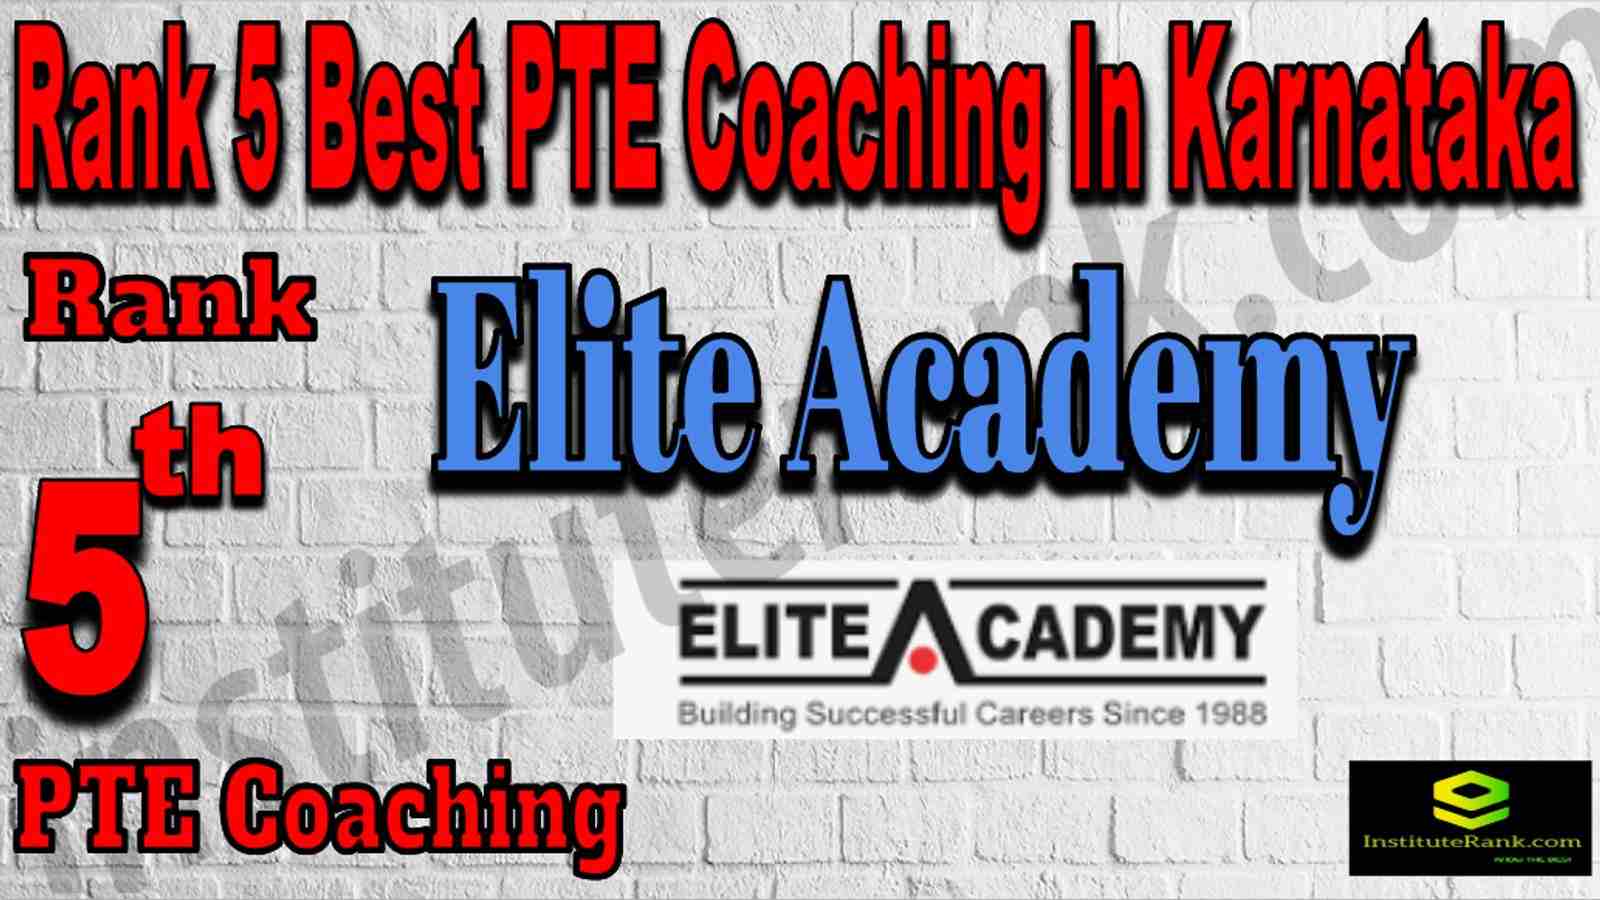 5th Best PTE Coaching In Karnataka